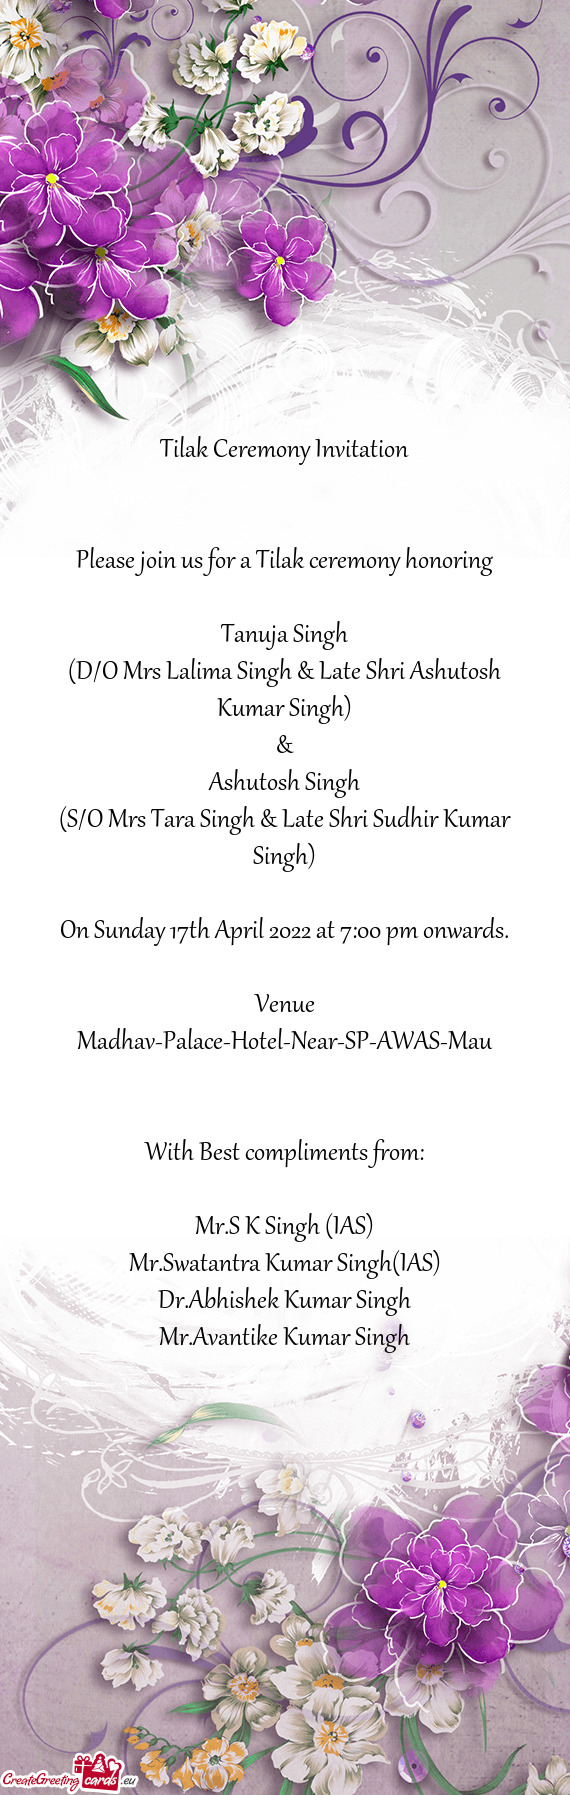 (D/O Mrs Lalima Singh & Late Shri Ashutosh Kumar Singh)